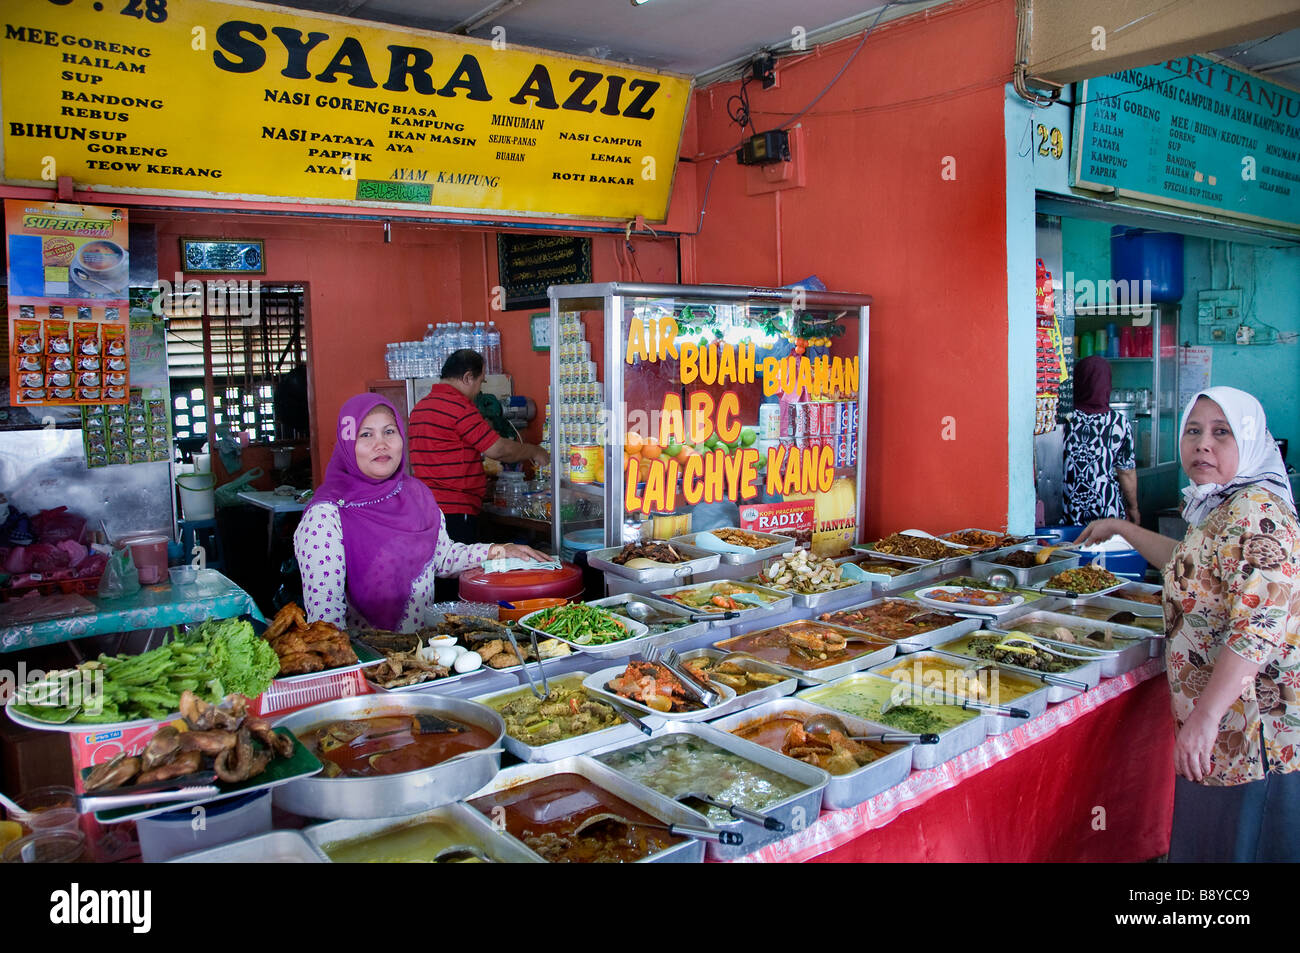 Jalan Masjid India e Jalam Tuanku Abdul Rahman musulmani indiani quartiere arabo il cibo del ristorante era di Kuala Lumpur in Malesia Foto Stock